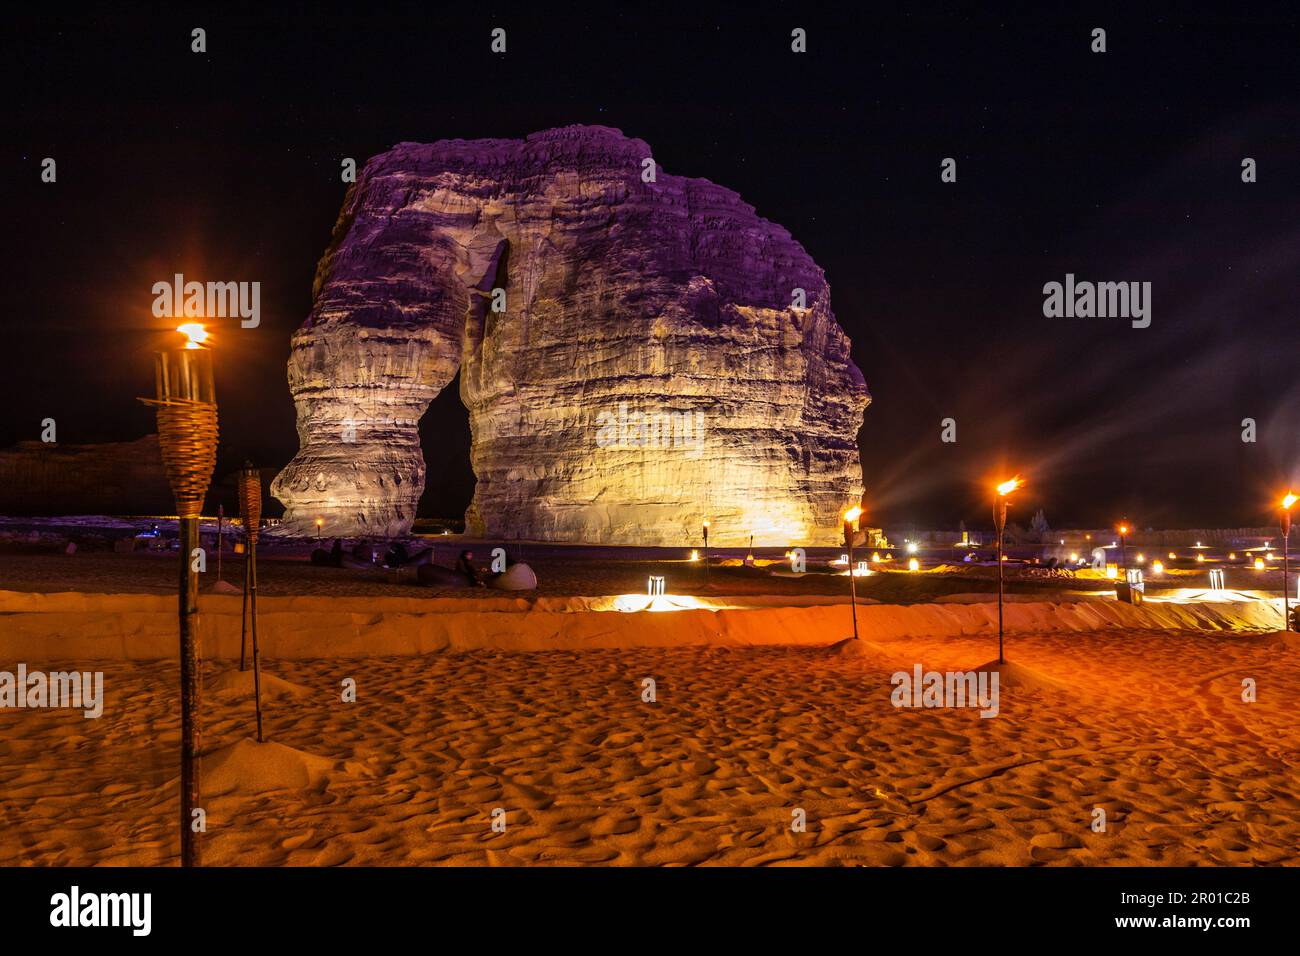 Illuminated by burning torches sandstone elephant rock erosion monolith standing in the night desert, Al Ula, Saudi Arabia Stock Photo